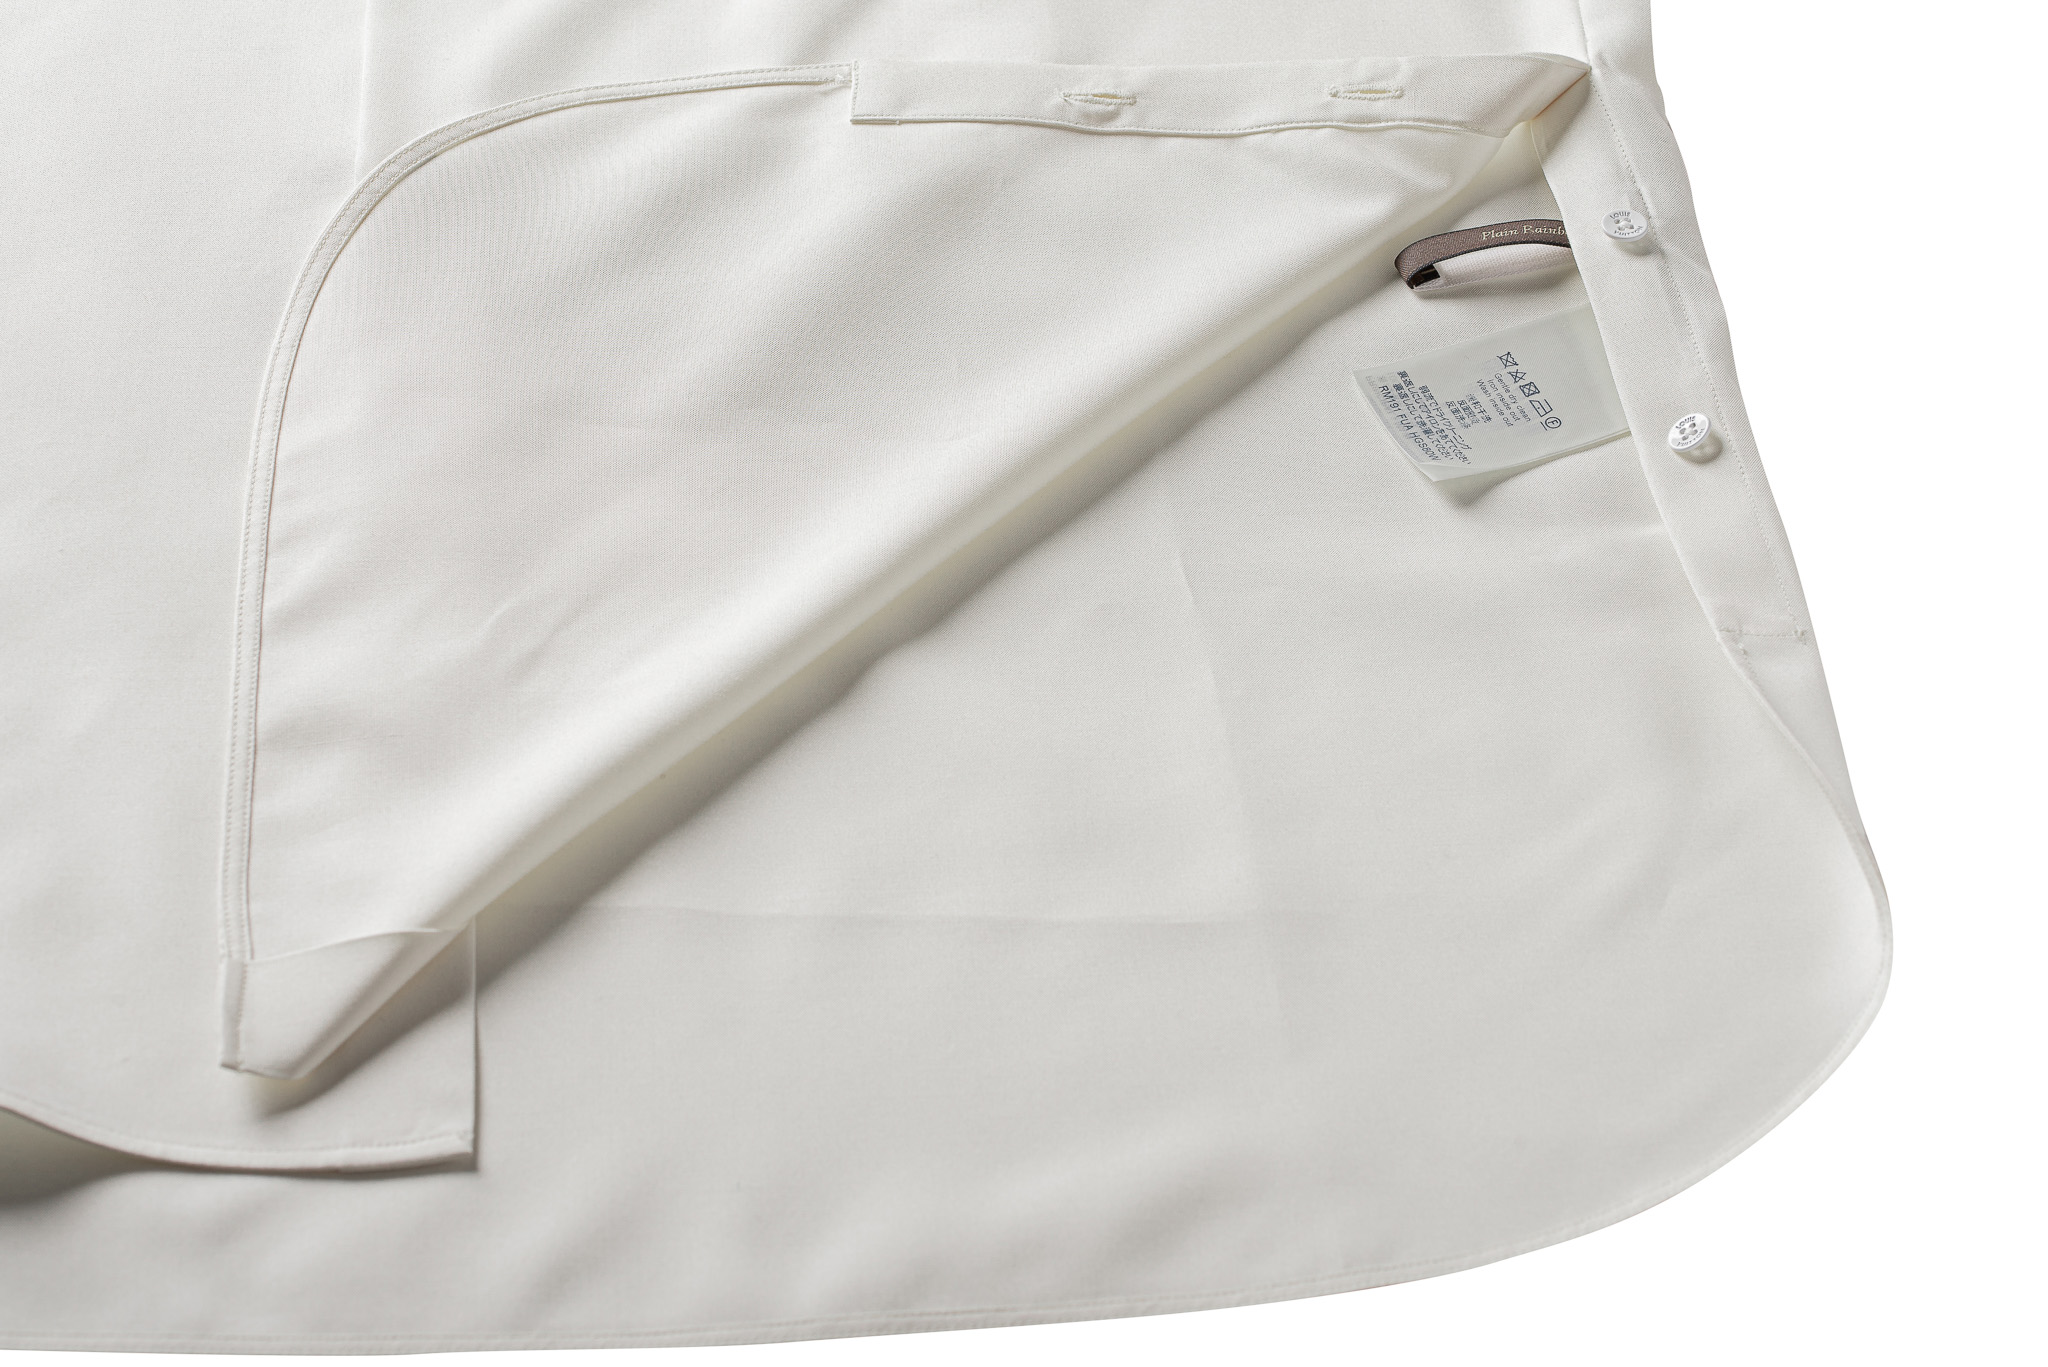 Louis Vuitton SS19 Plain Rainbow White Cargo Shirt - Ākaibu Store